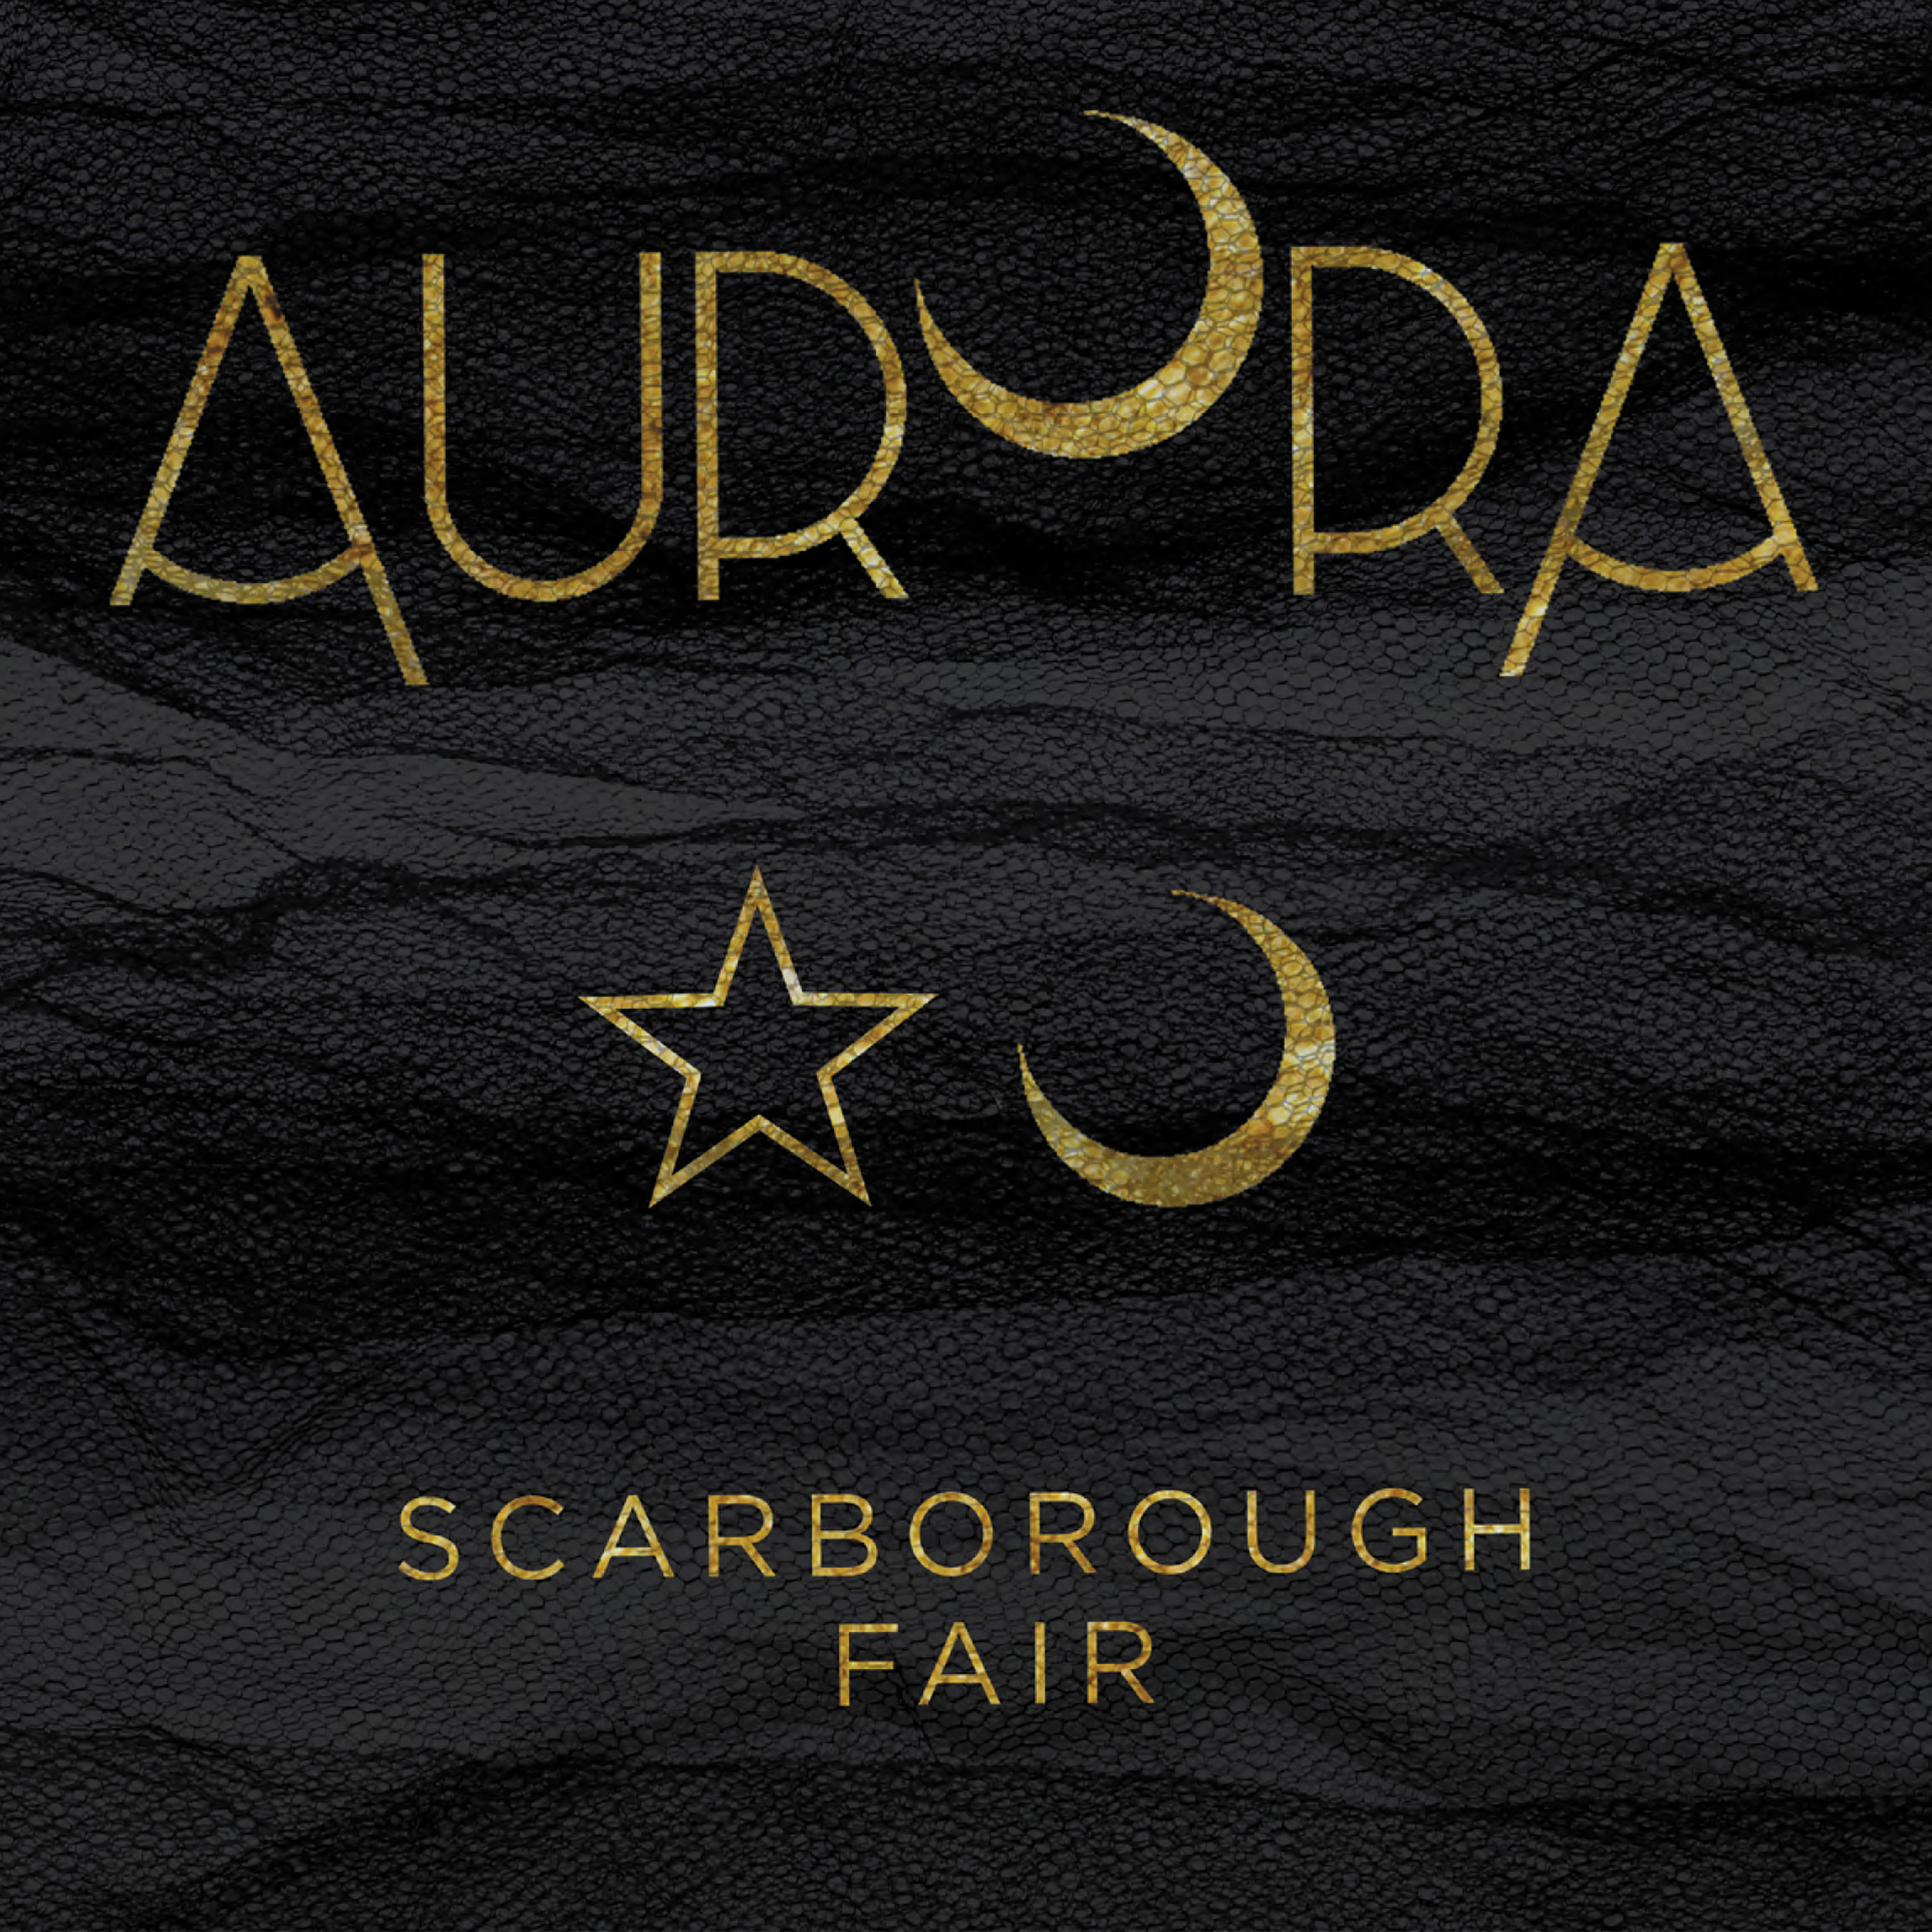 Scarborough Fair (ballad) - Wikipedia